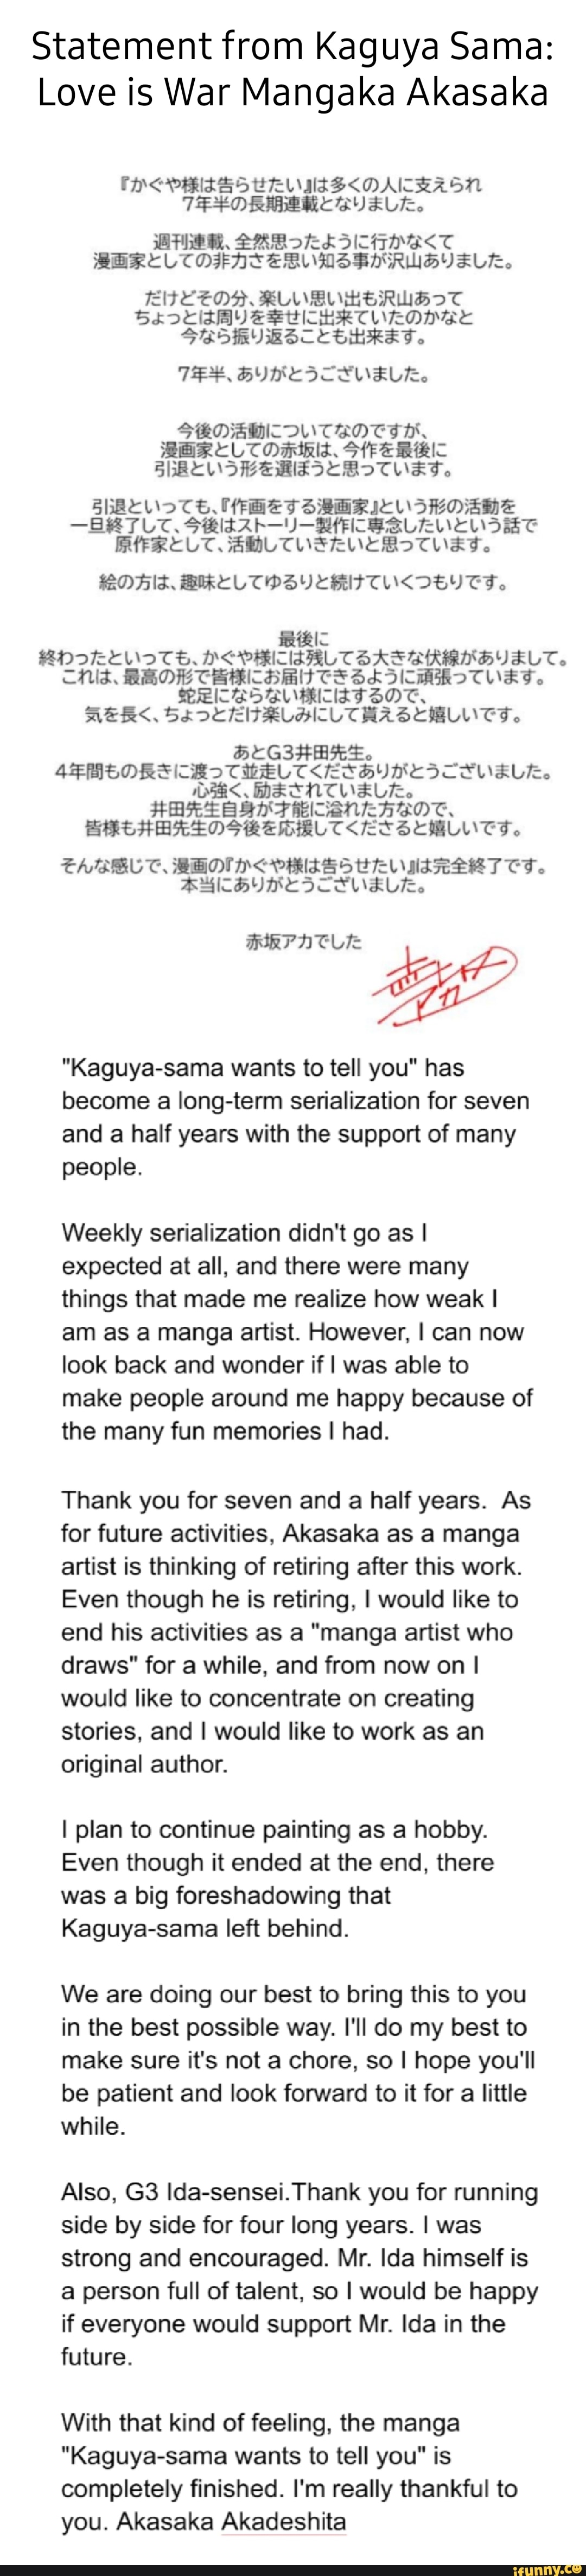 Kaguya-sama: Love is War's mangaka is retiring from drawing